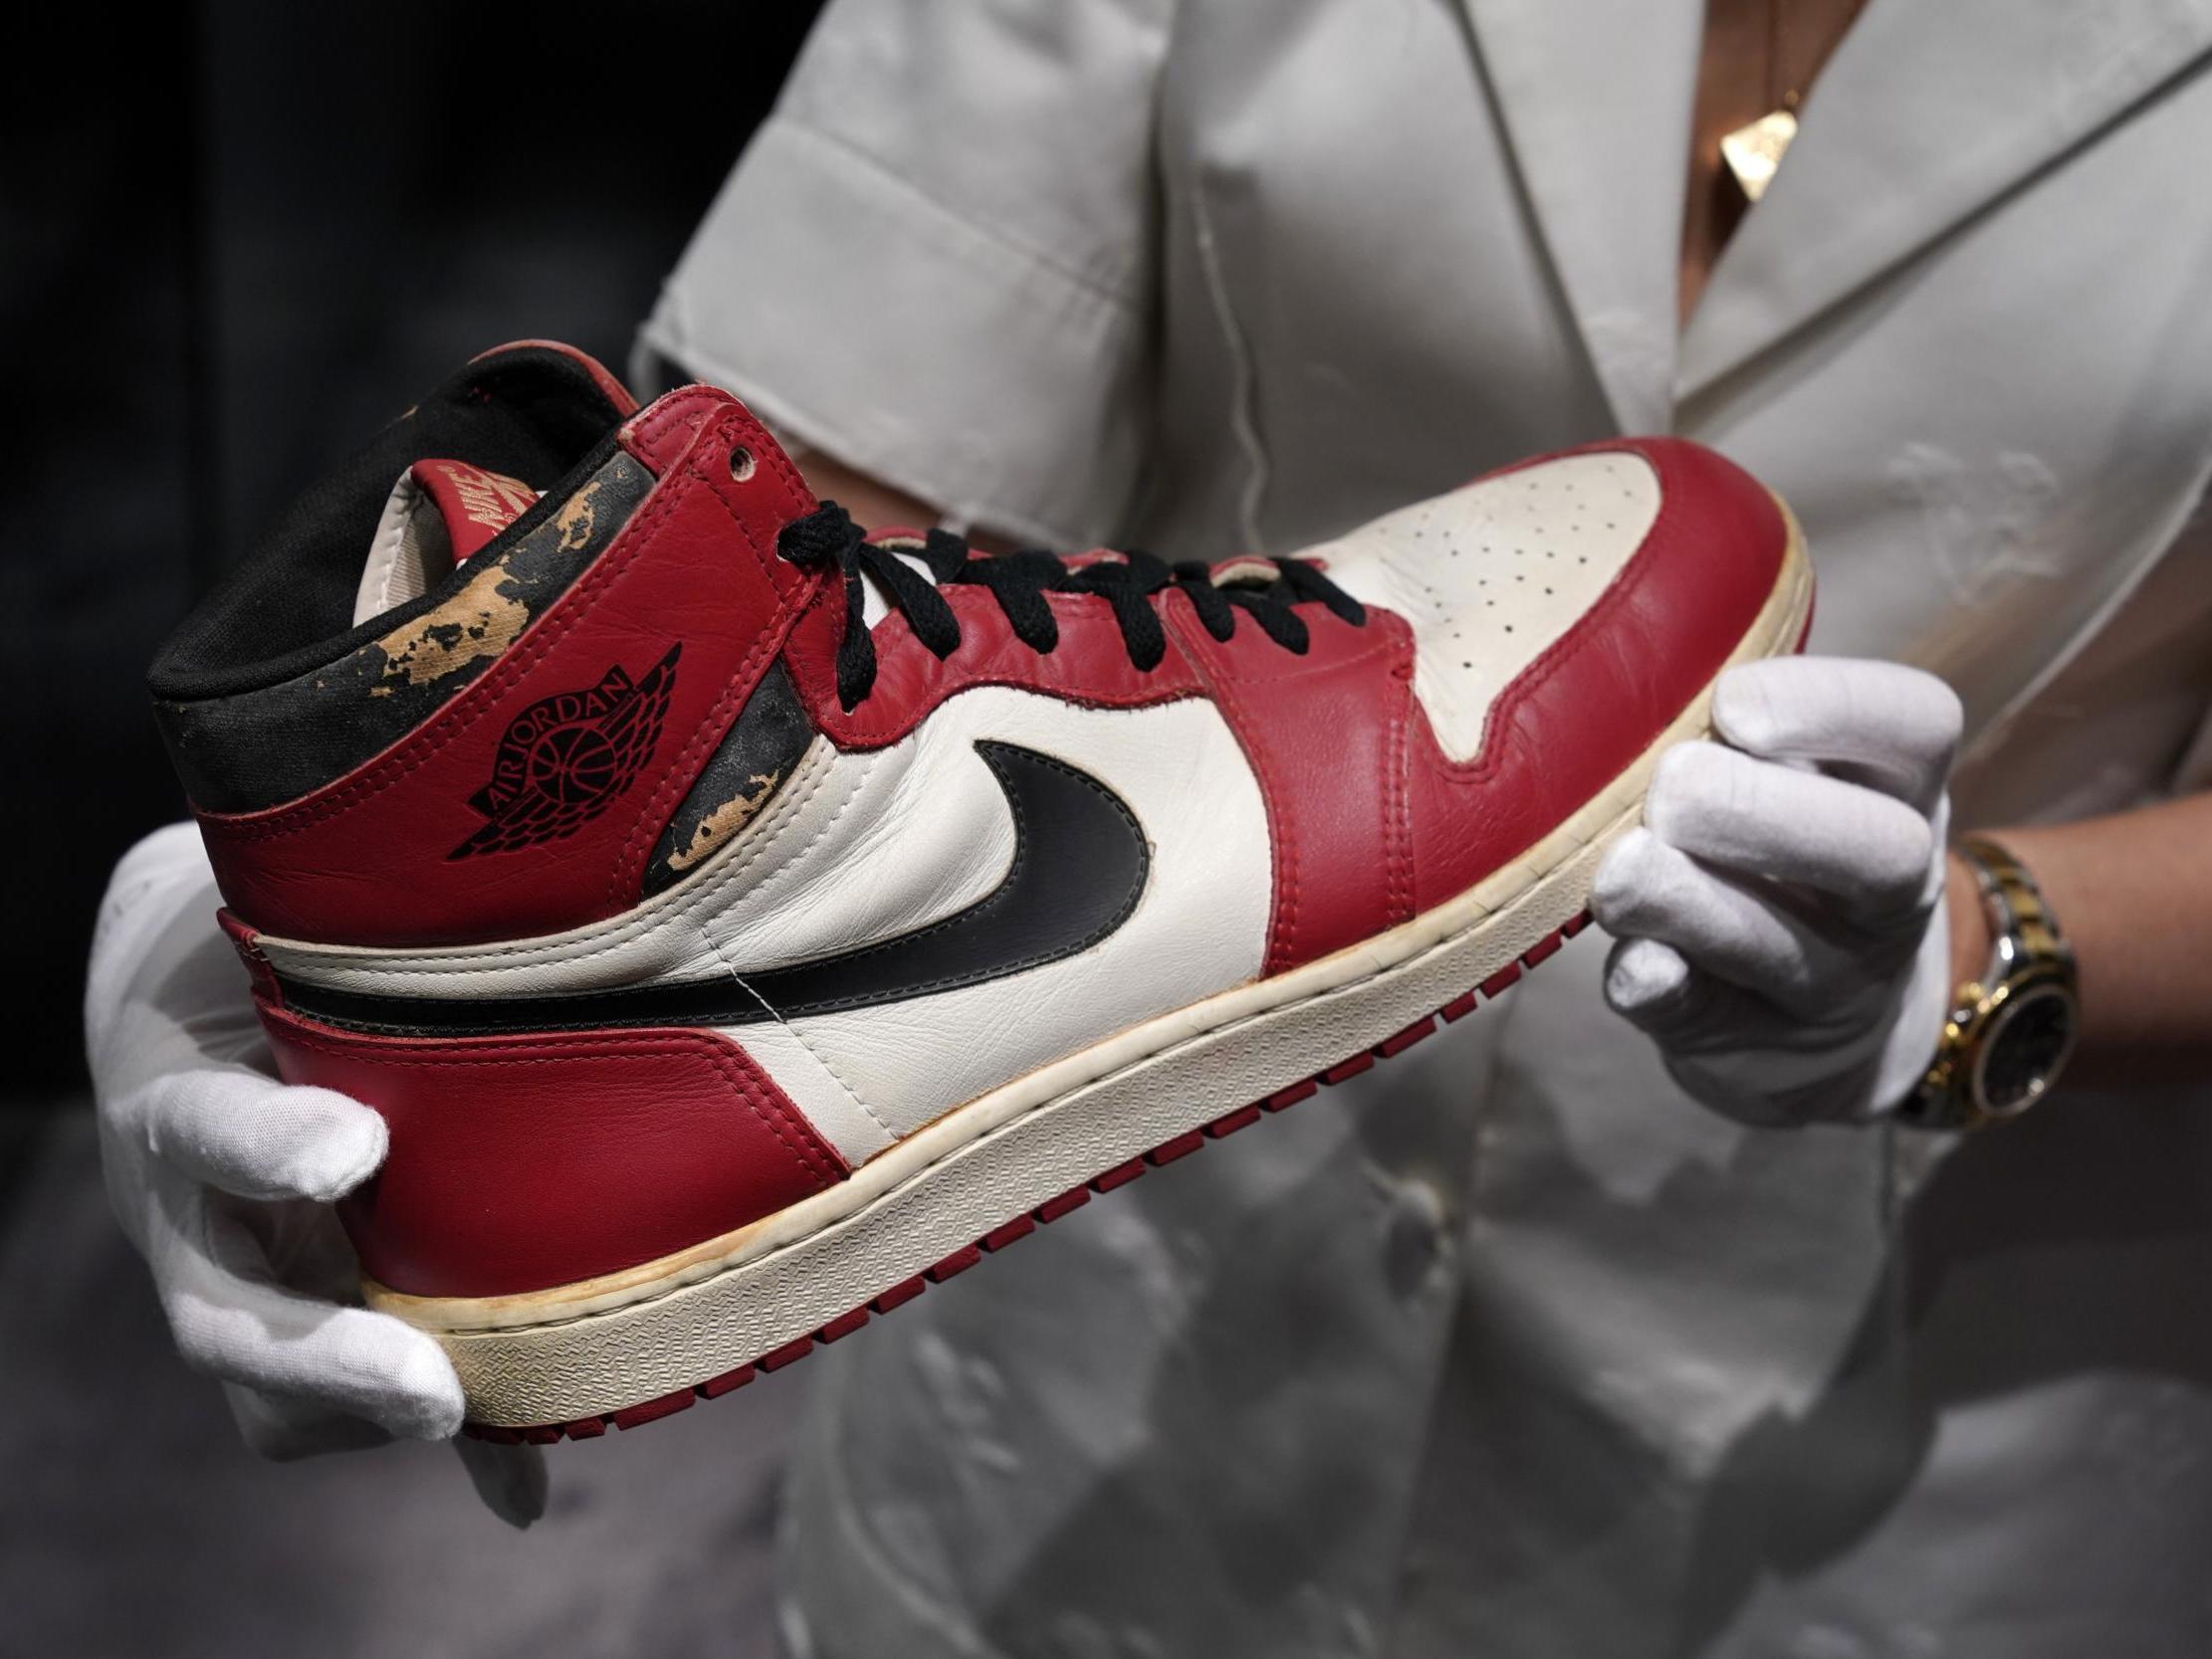 Iconic original Air Jordans worn by 